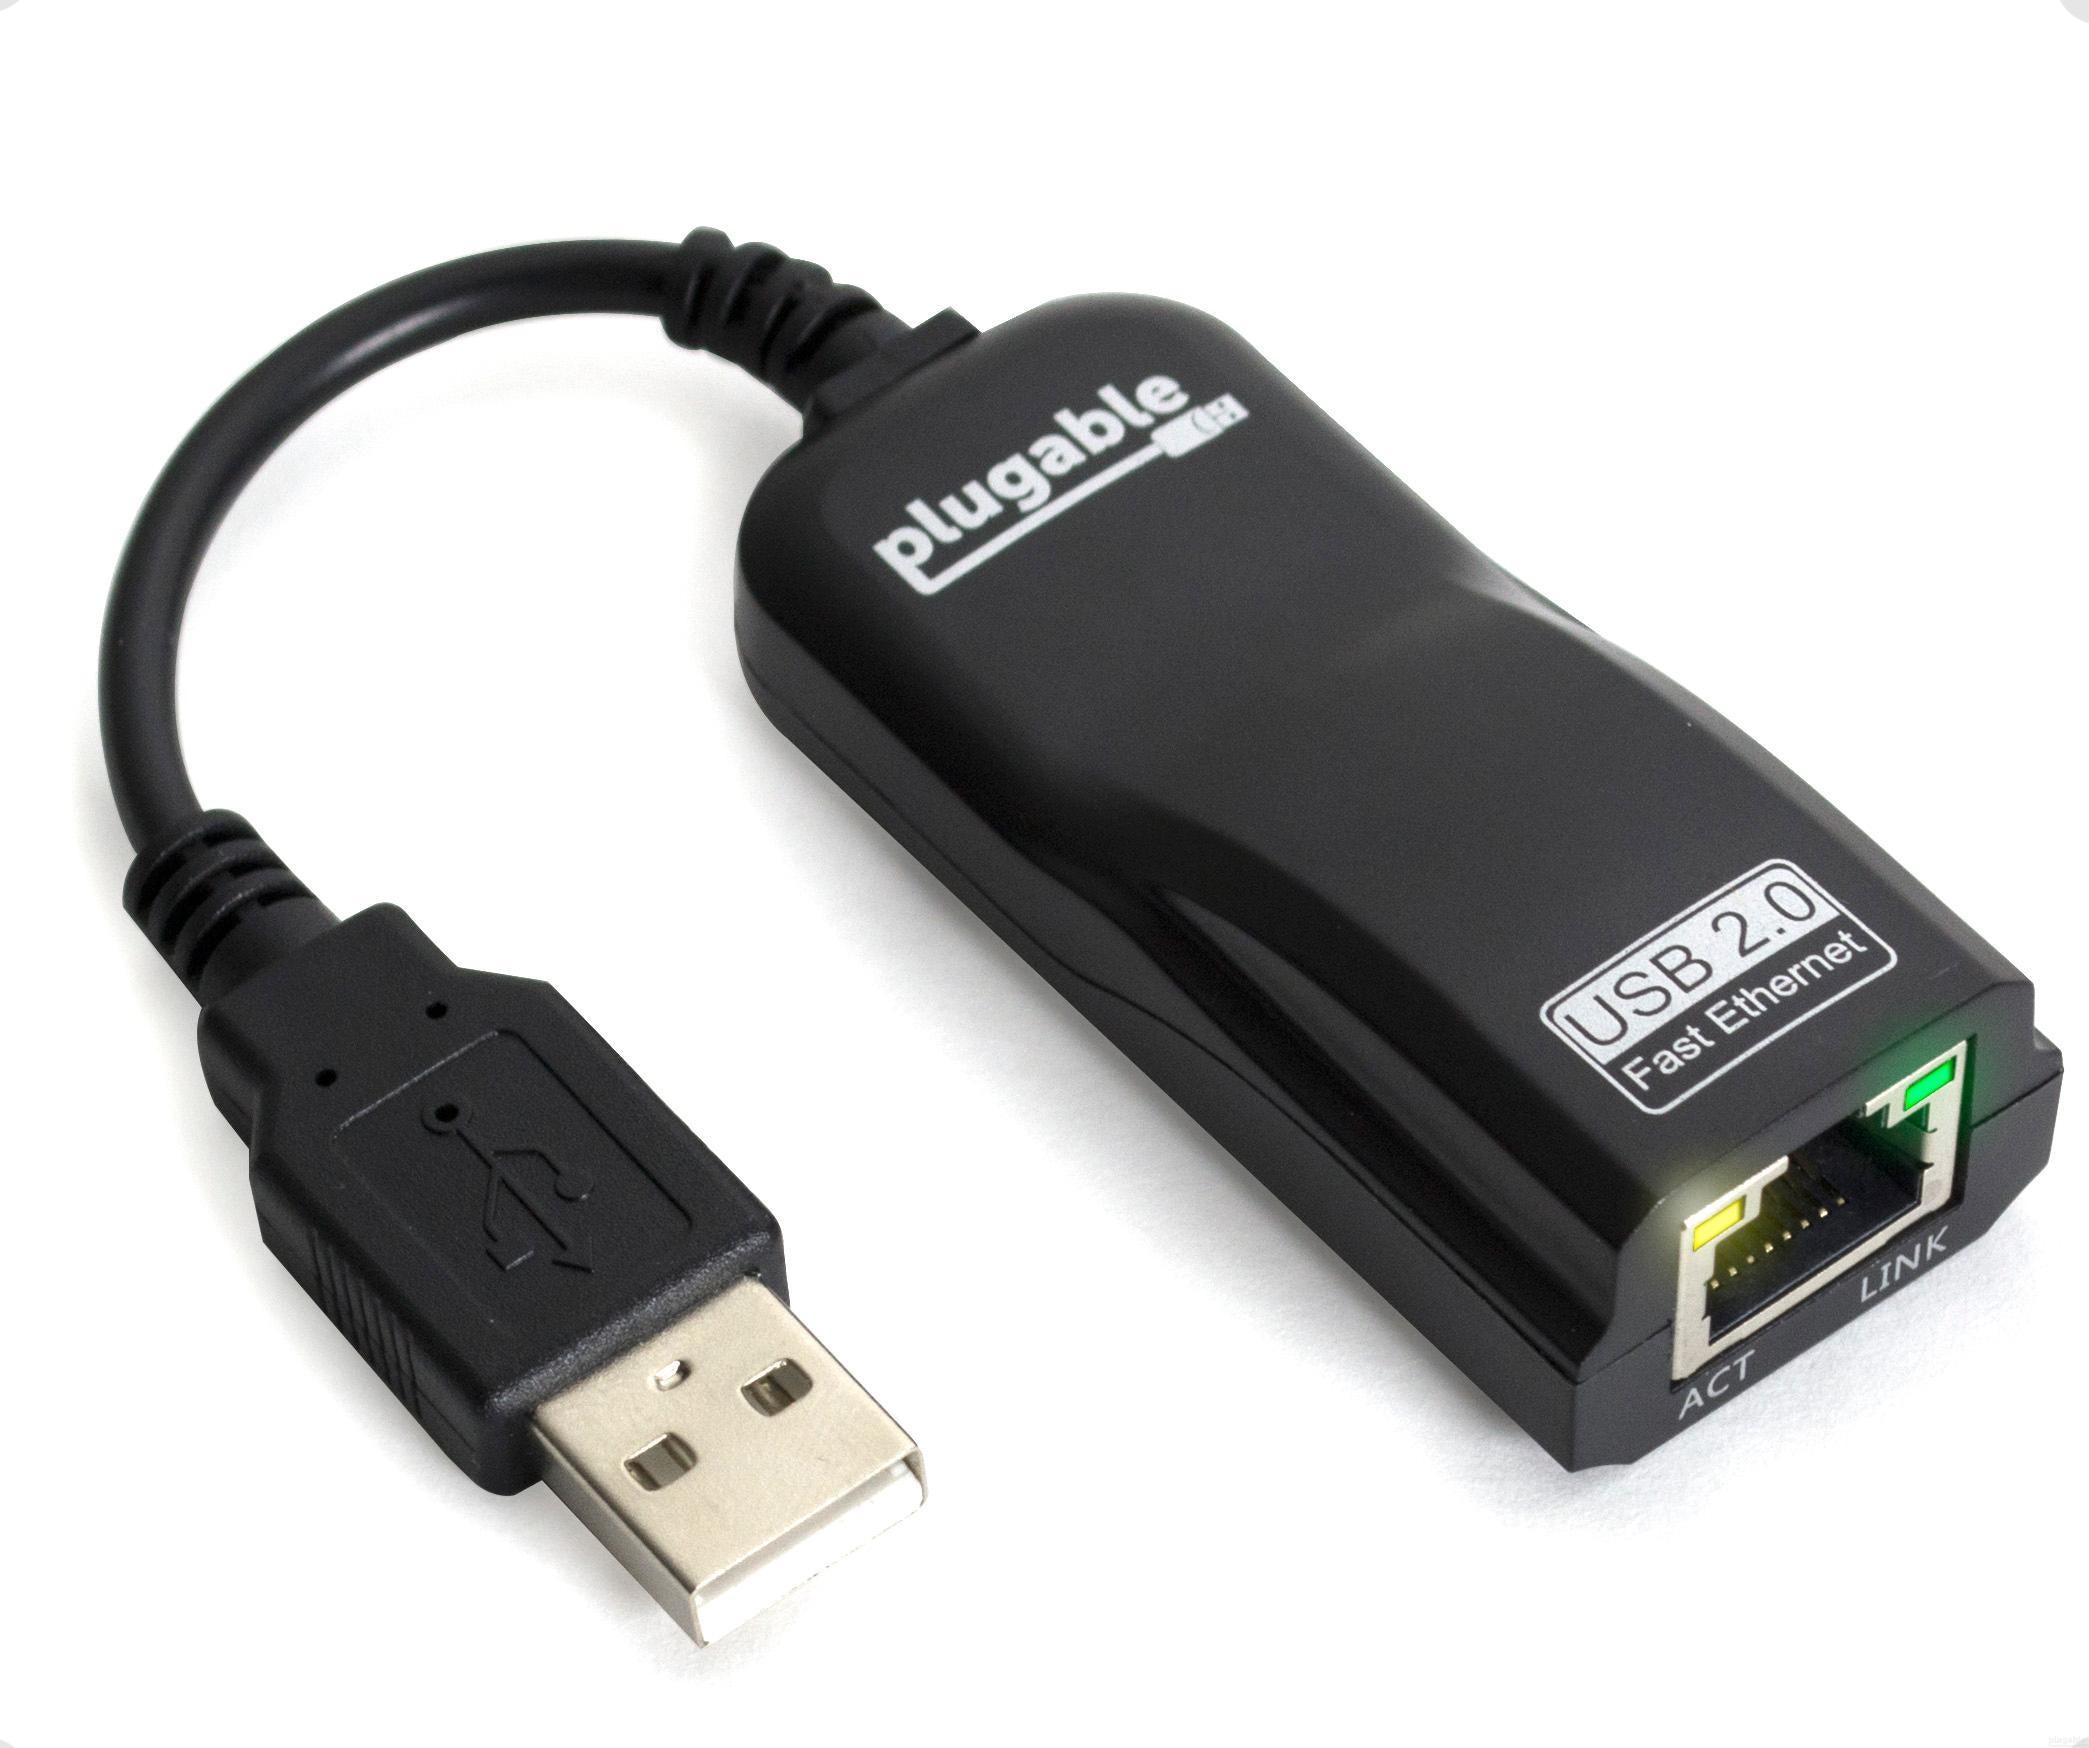 Plugable USB 2.0 10/100 Ethernet Adapter – Plugable Technologies